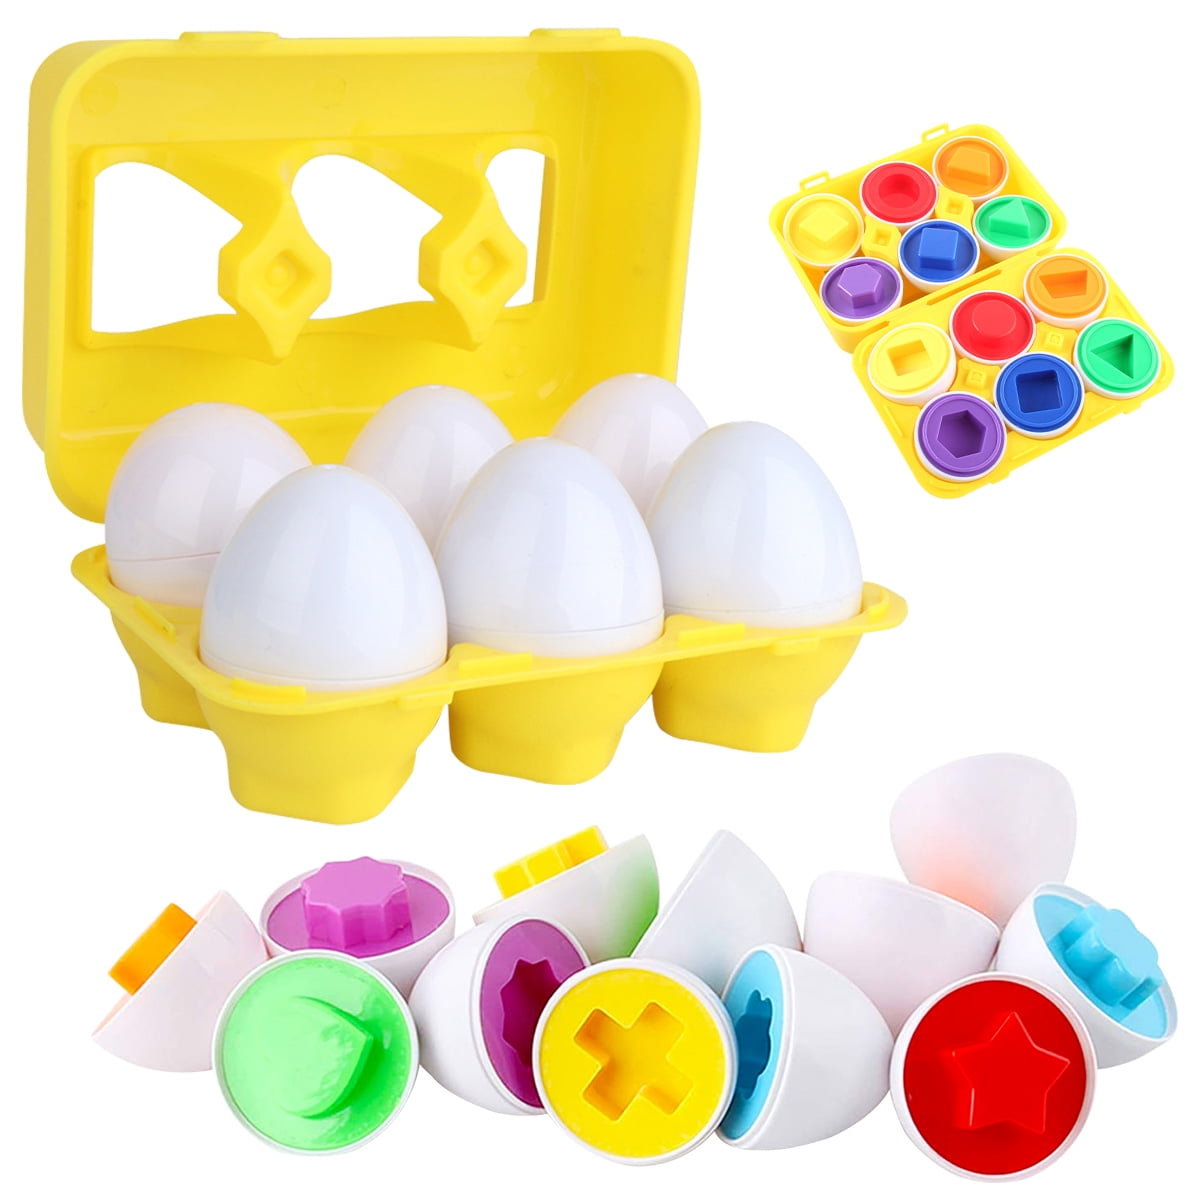 Adoeve Gonikm 6Pcs Kids Infant Toddler Simulation Eggs Color Shape Matching Egg Set Educational Development Puzzle Toy Pegged Puzzles Toy Kids Education Toy for Kids Boys Girls Pegged Puzzles 